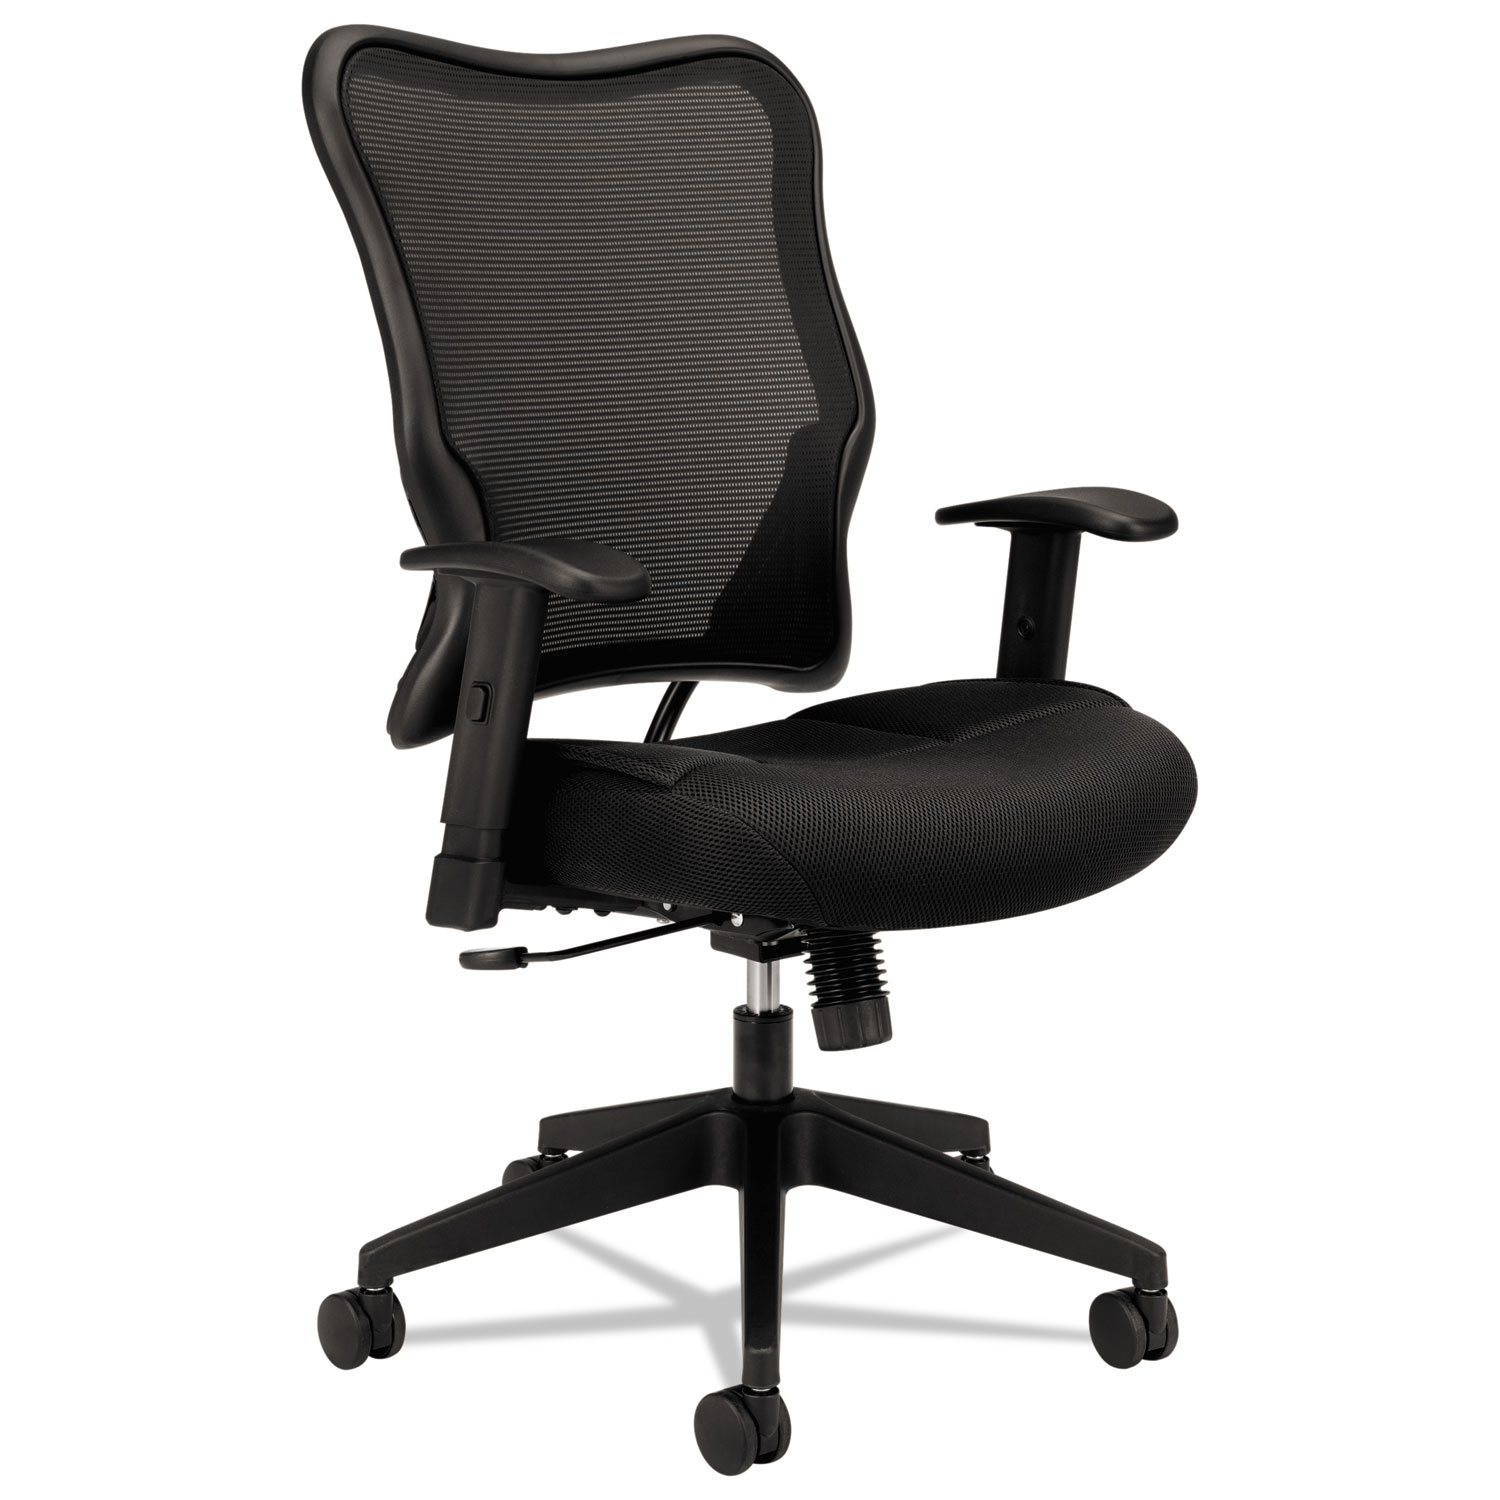  HON HVL702.MM10 VL702 Mesh High-Back Task Chair, Supports up to 250 lbs., Black Seat/Black Back, Black Base (BSXVL702MM10) 